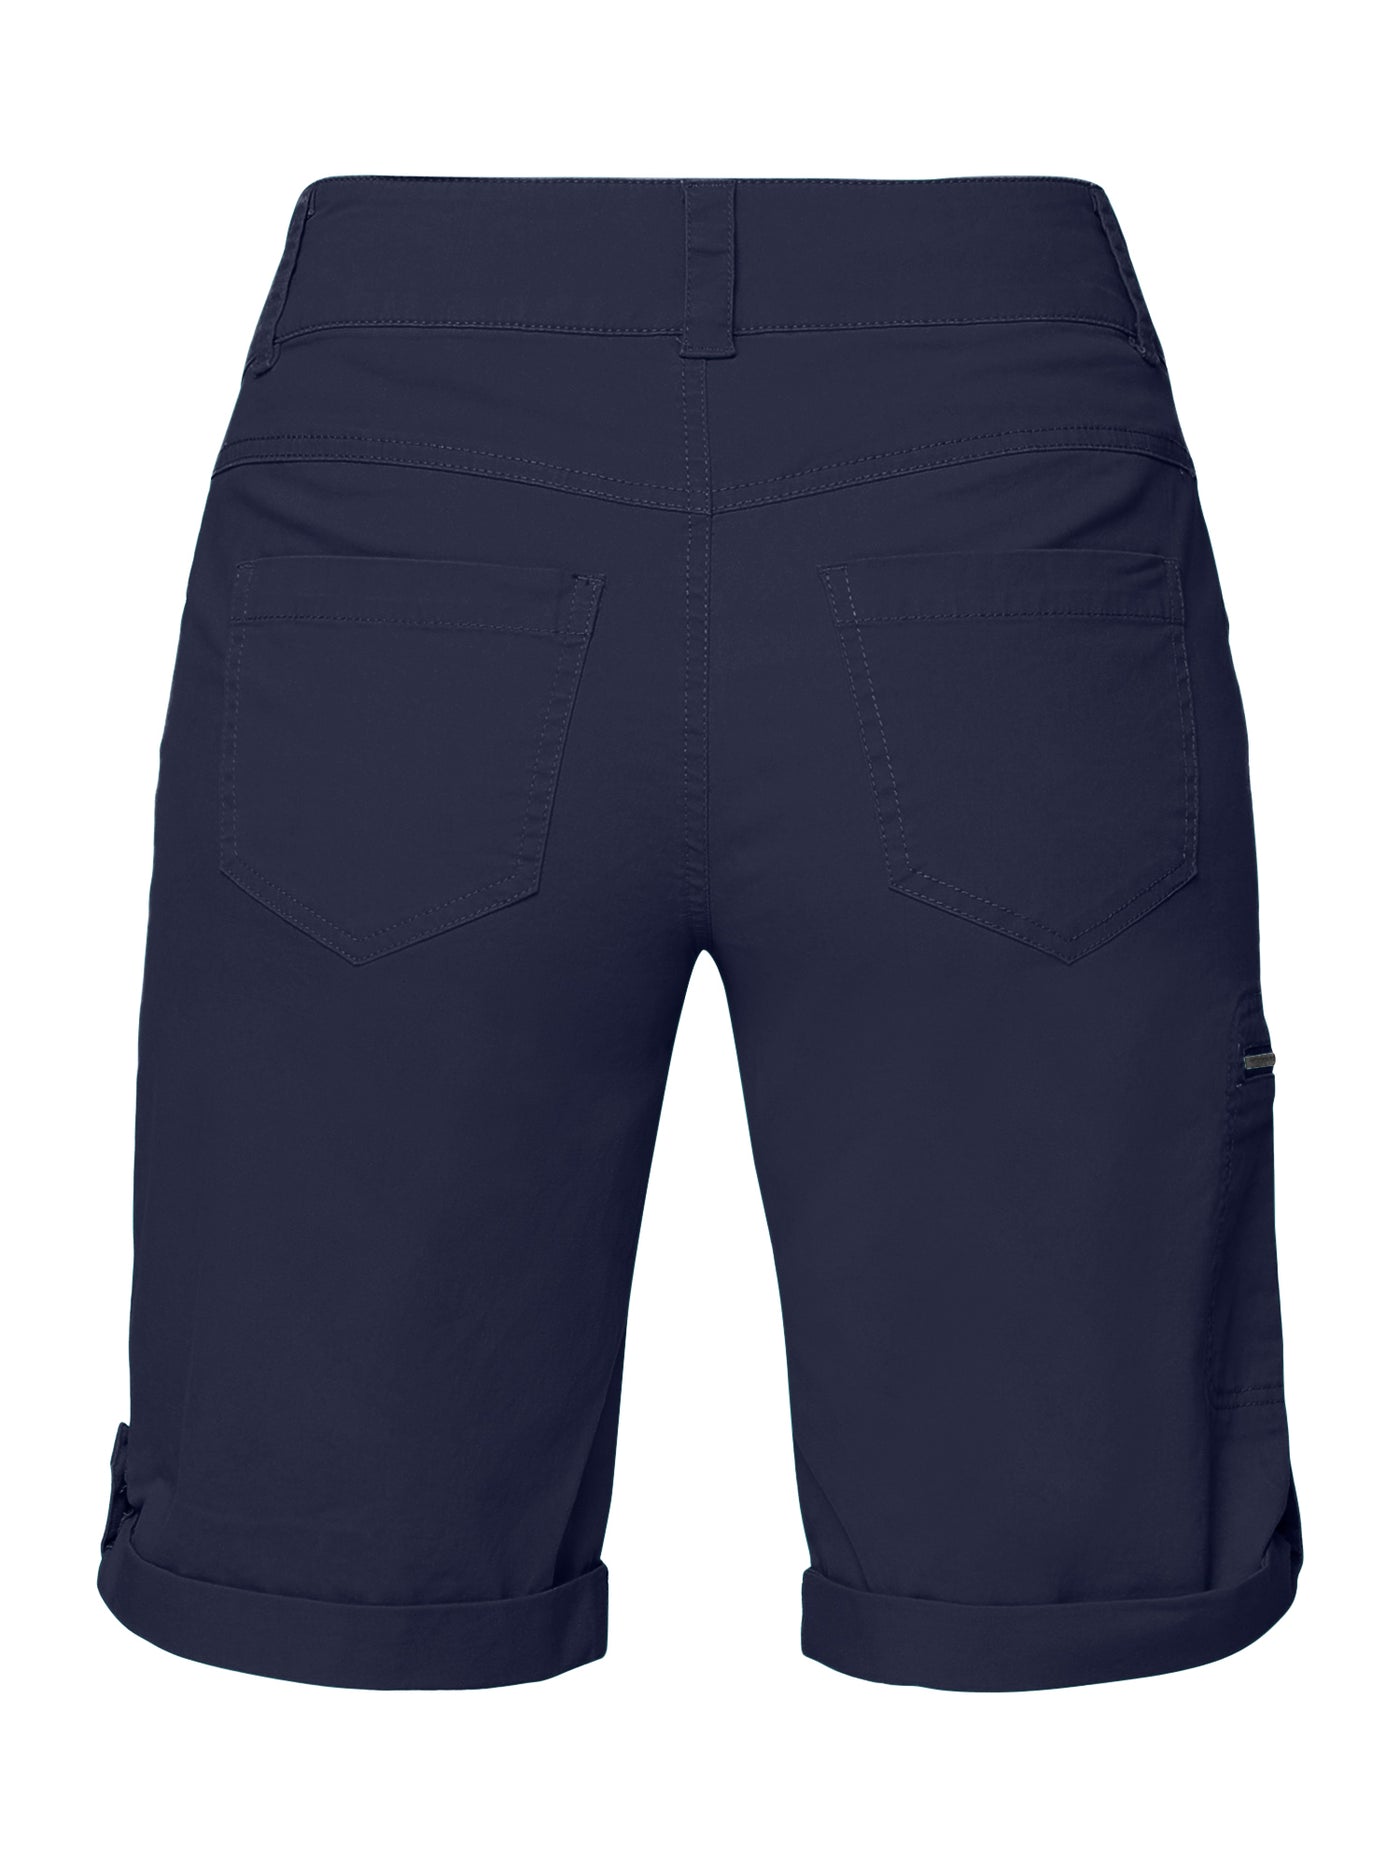 Shorts Bermuda - Navy Blue